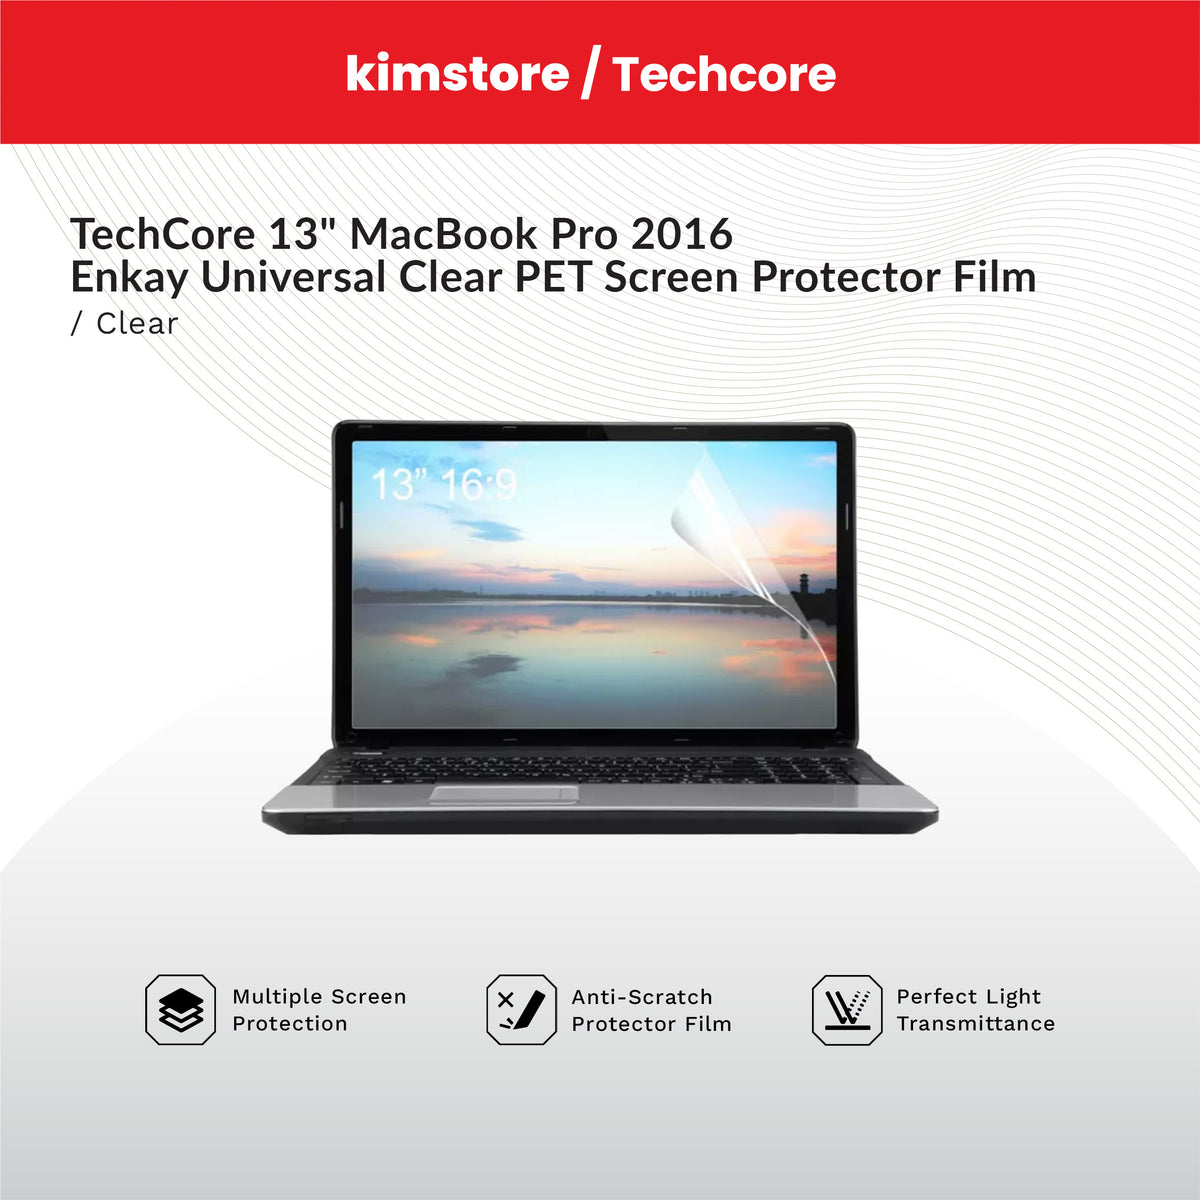 TECHCORE For 13" MacBook Pro 2016 Etc ENKAY Universal ClearPET ScreenProtector Film